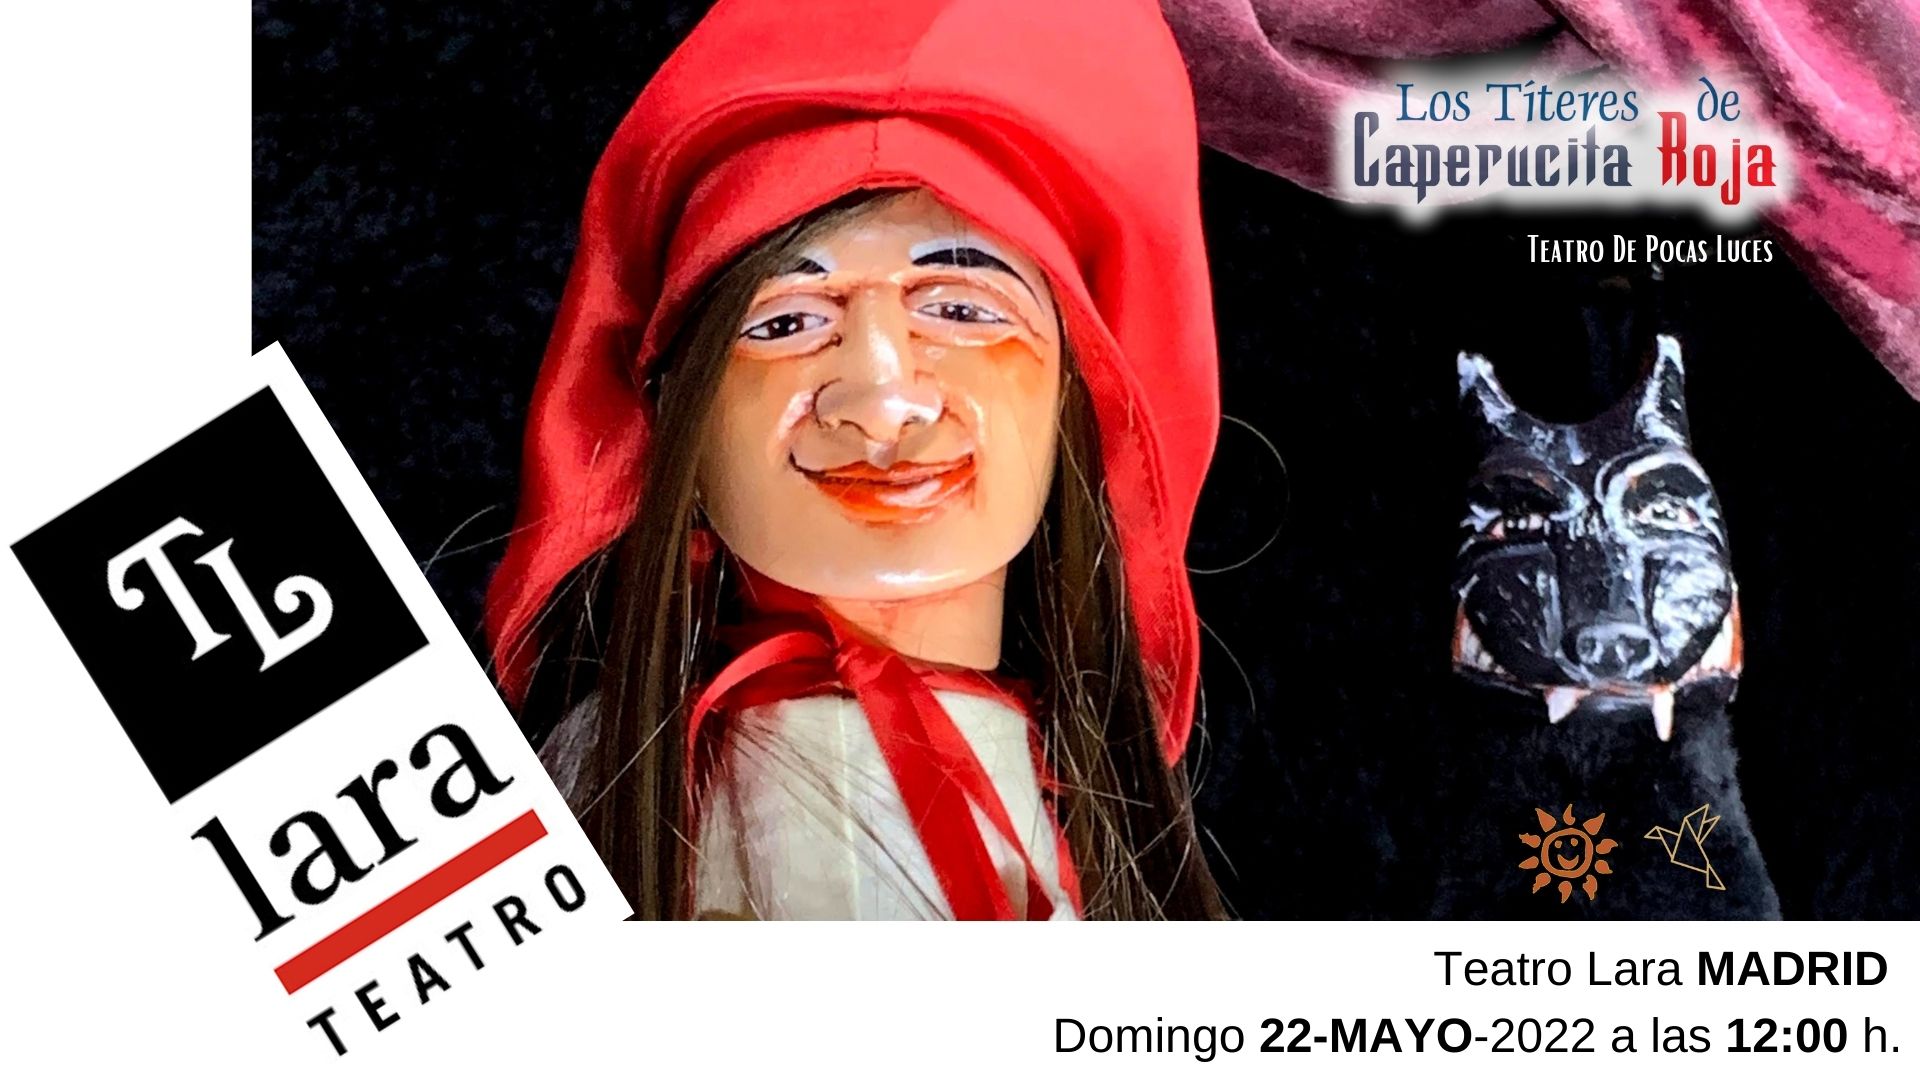 Los Titeres de Caperucita Roja en Madrid-Teatro Lara